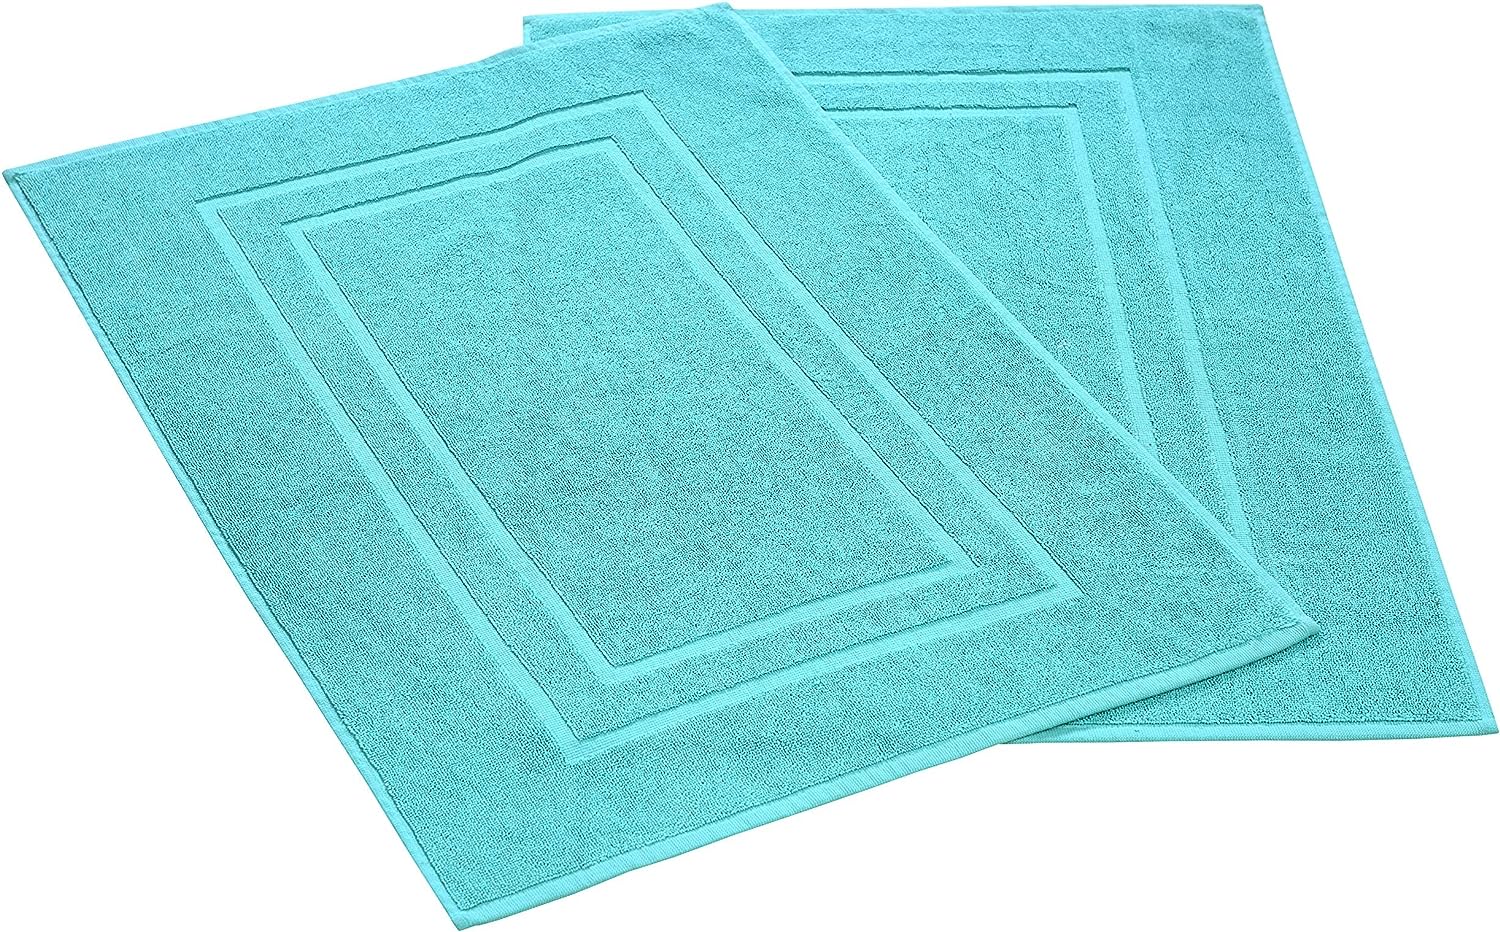 Soft Bath Mats, 2 Piece -Towel Like Bath Mats (30x21 Inch)  [NOT A Bathroom Rug] Soft Absorbent Washable Mats